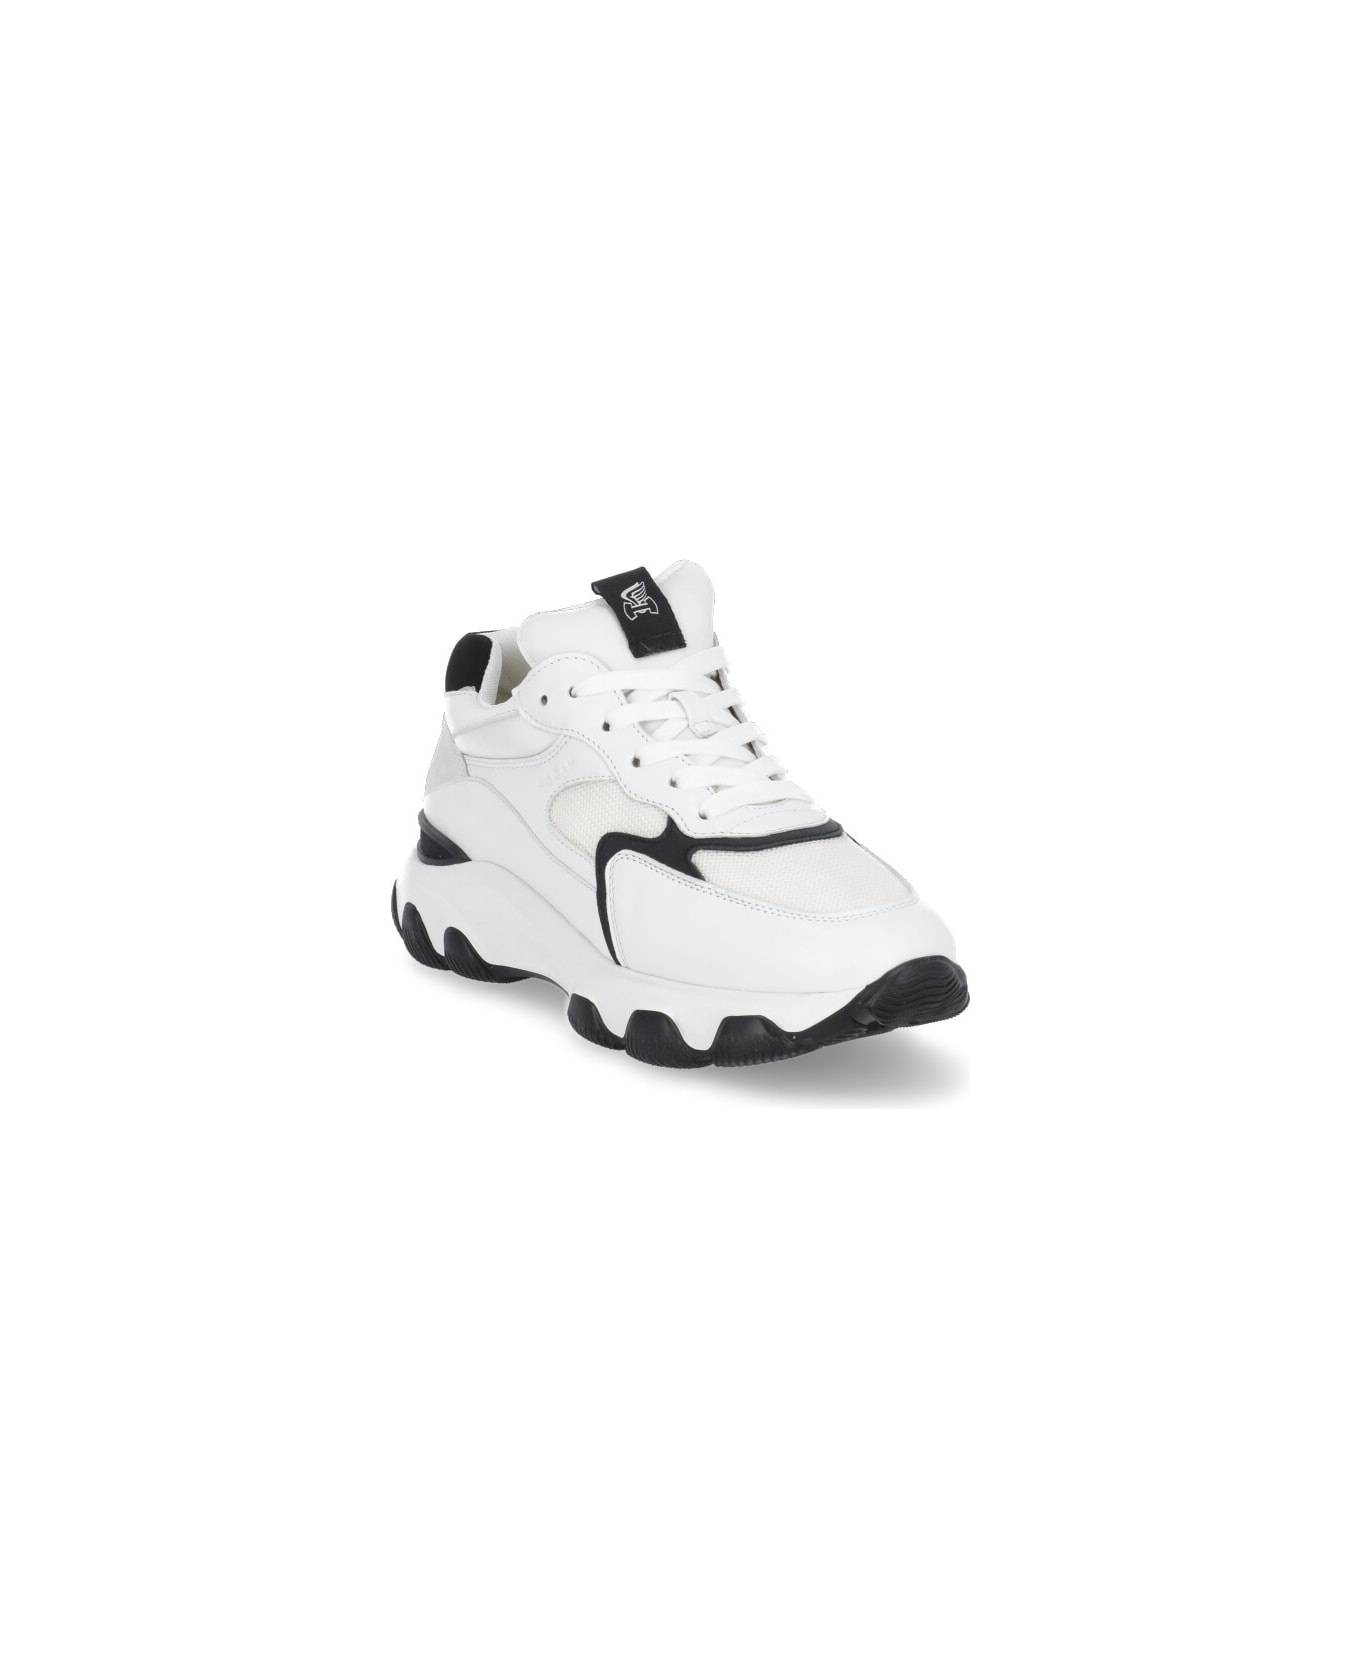 Hogan Hyperactive Sneakers - White スニーカー